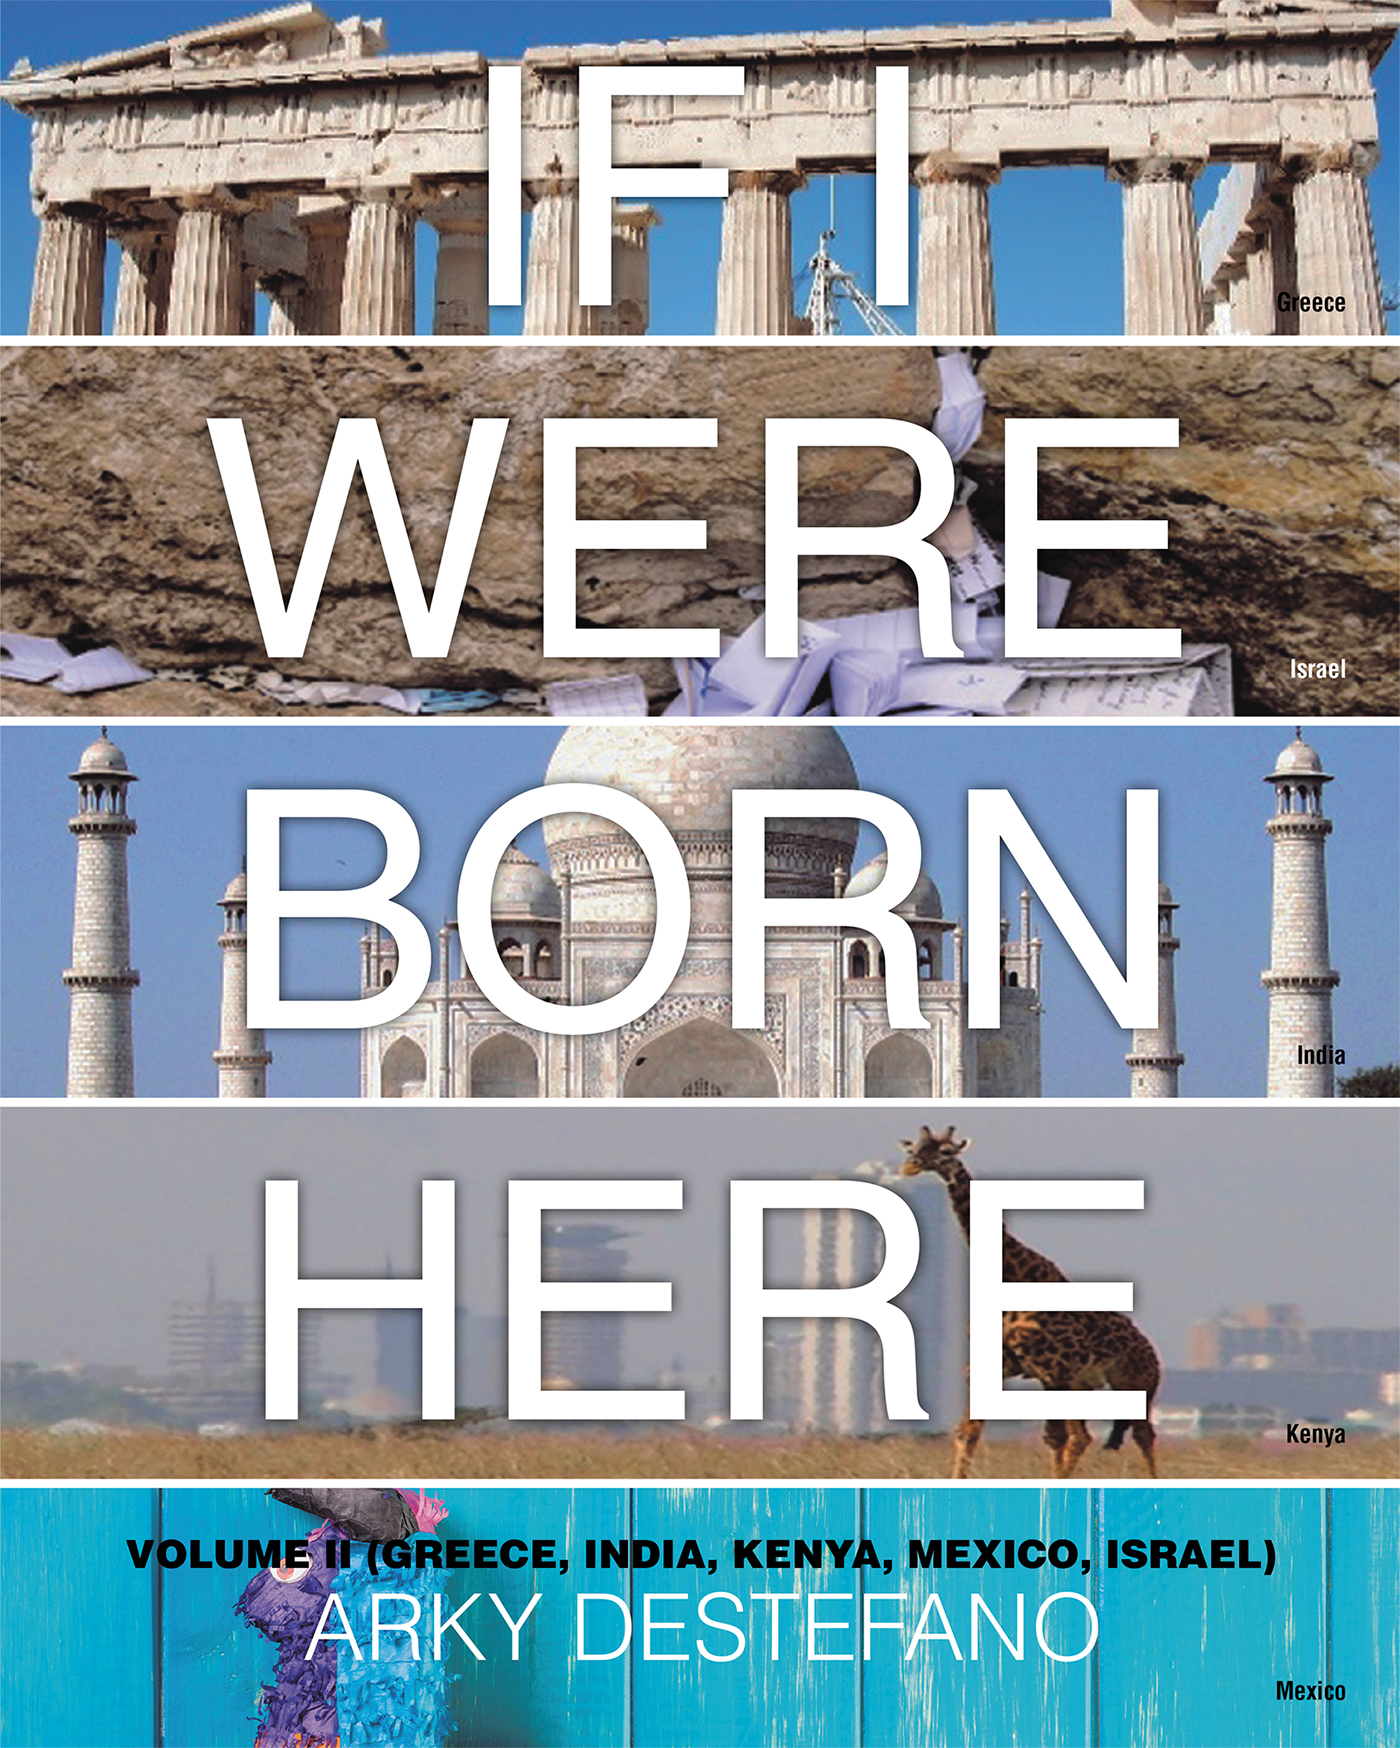 If I Were Born Here Volume II  (Greece, India, Kenya, Mexico, Israel) Cover Image